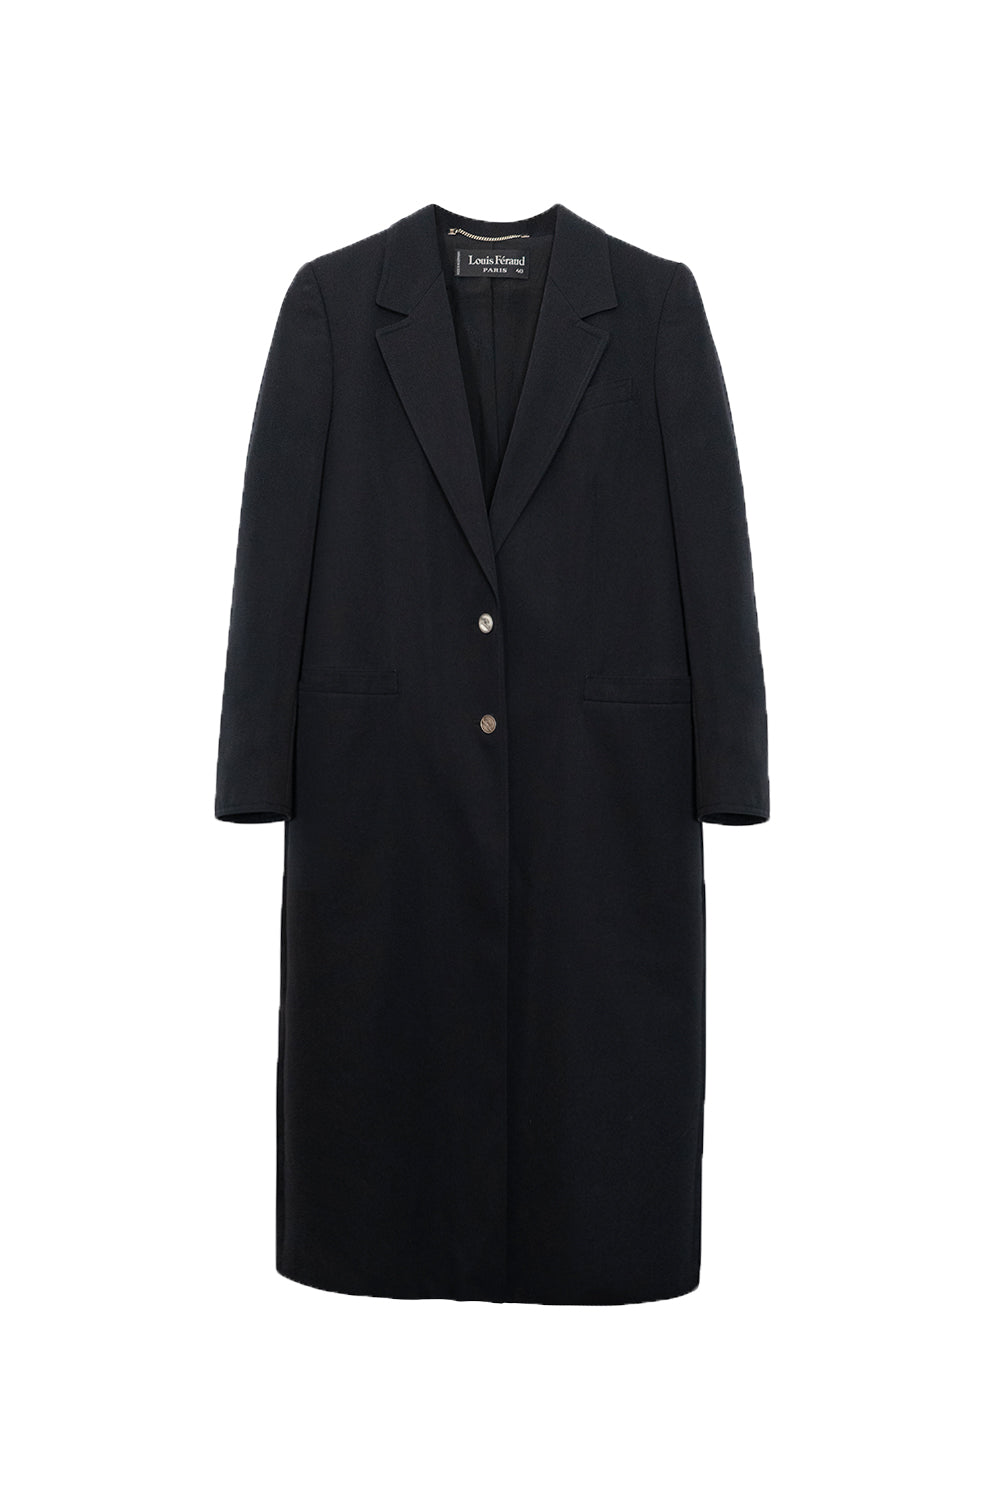 Louis Feraud Vintage Blazer Coat Size 8-12